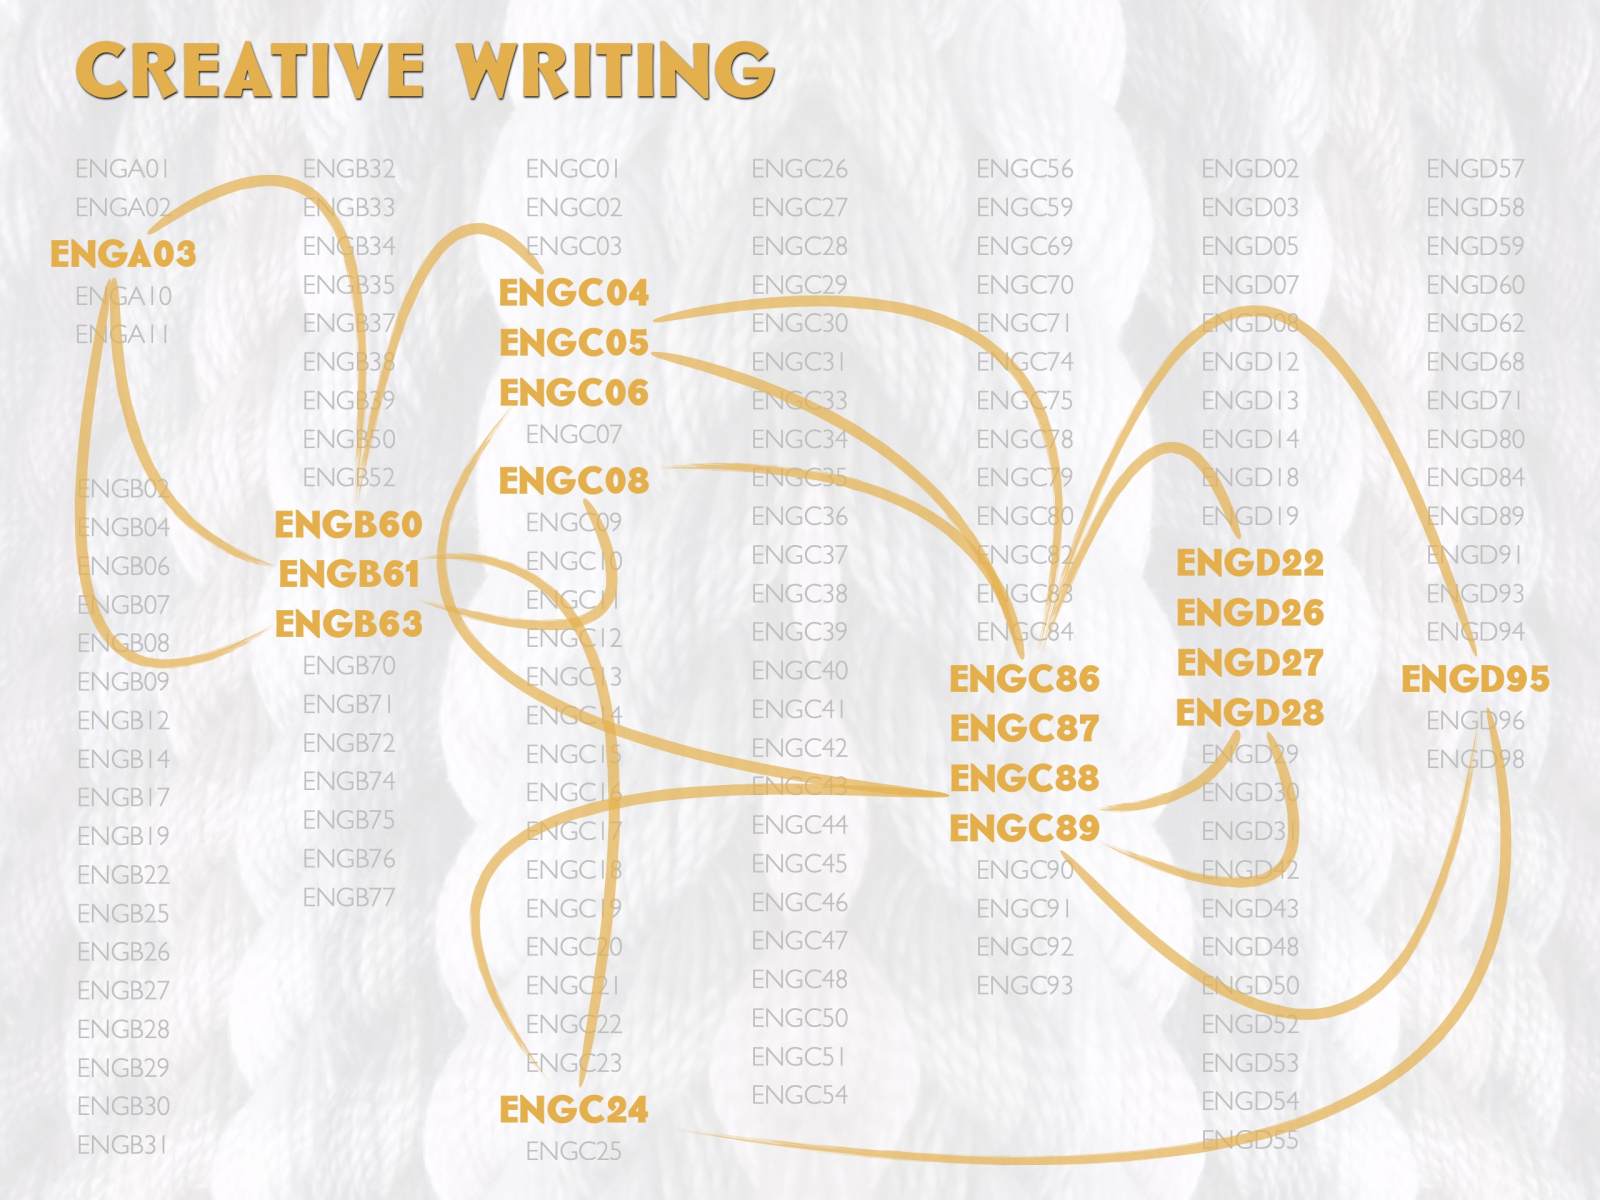 Creative Writing road map